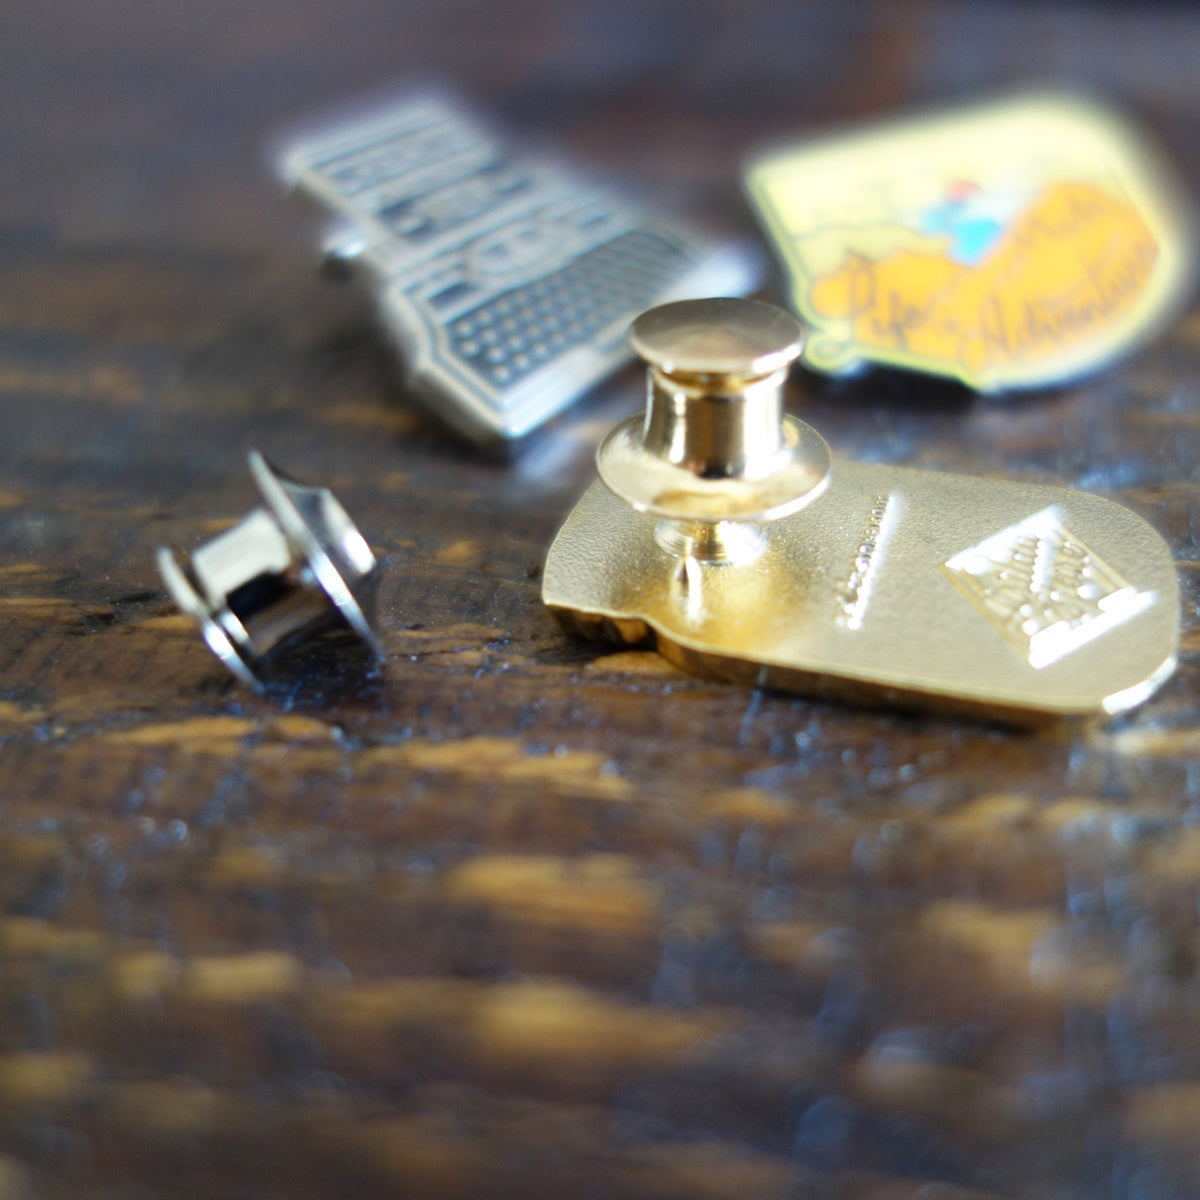 Deluxe Pin Locks. Pack of 10 - Asilda Store